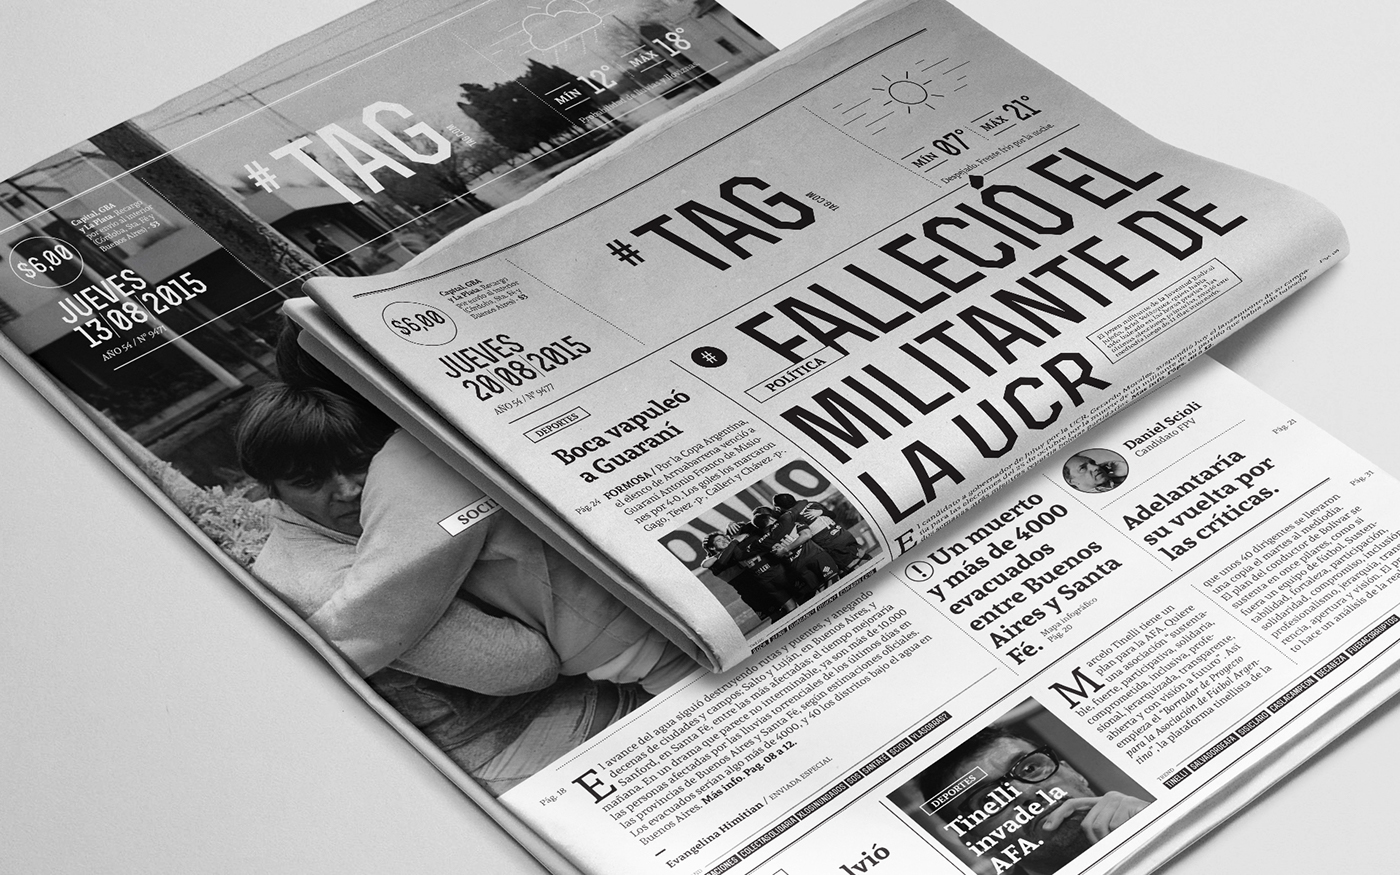 tapas diario newspaper cover editorial manela Federico Molinari